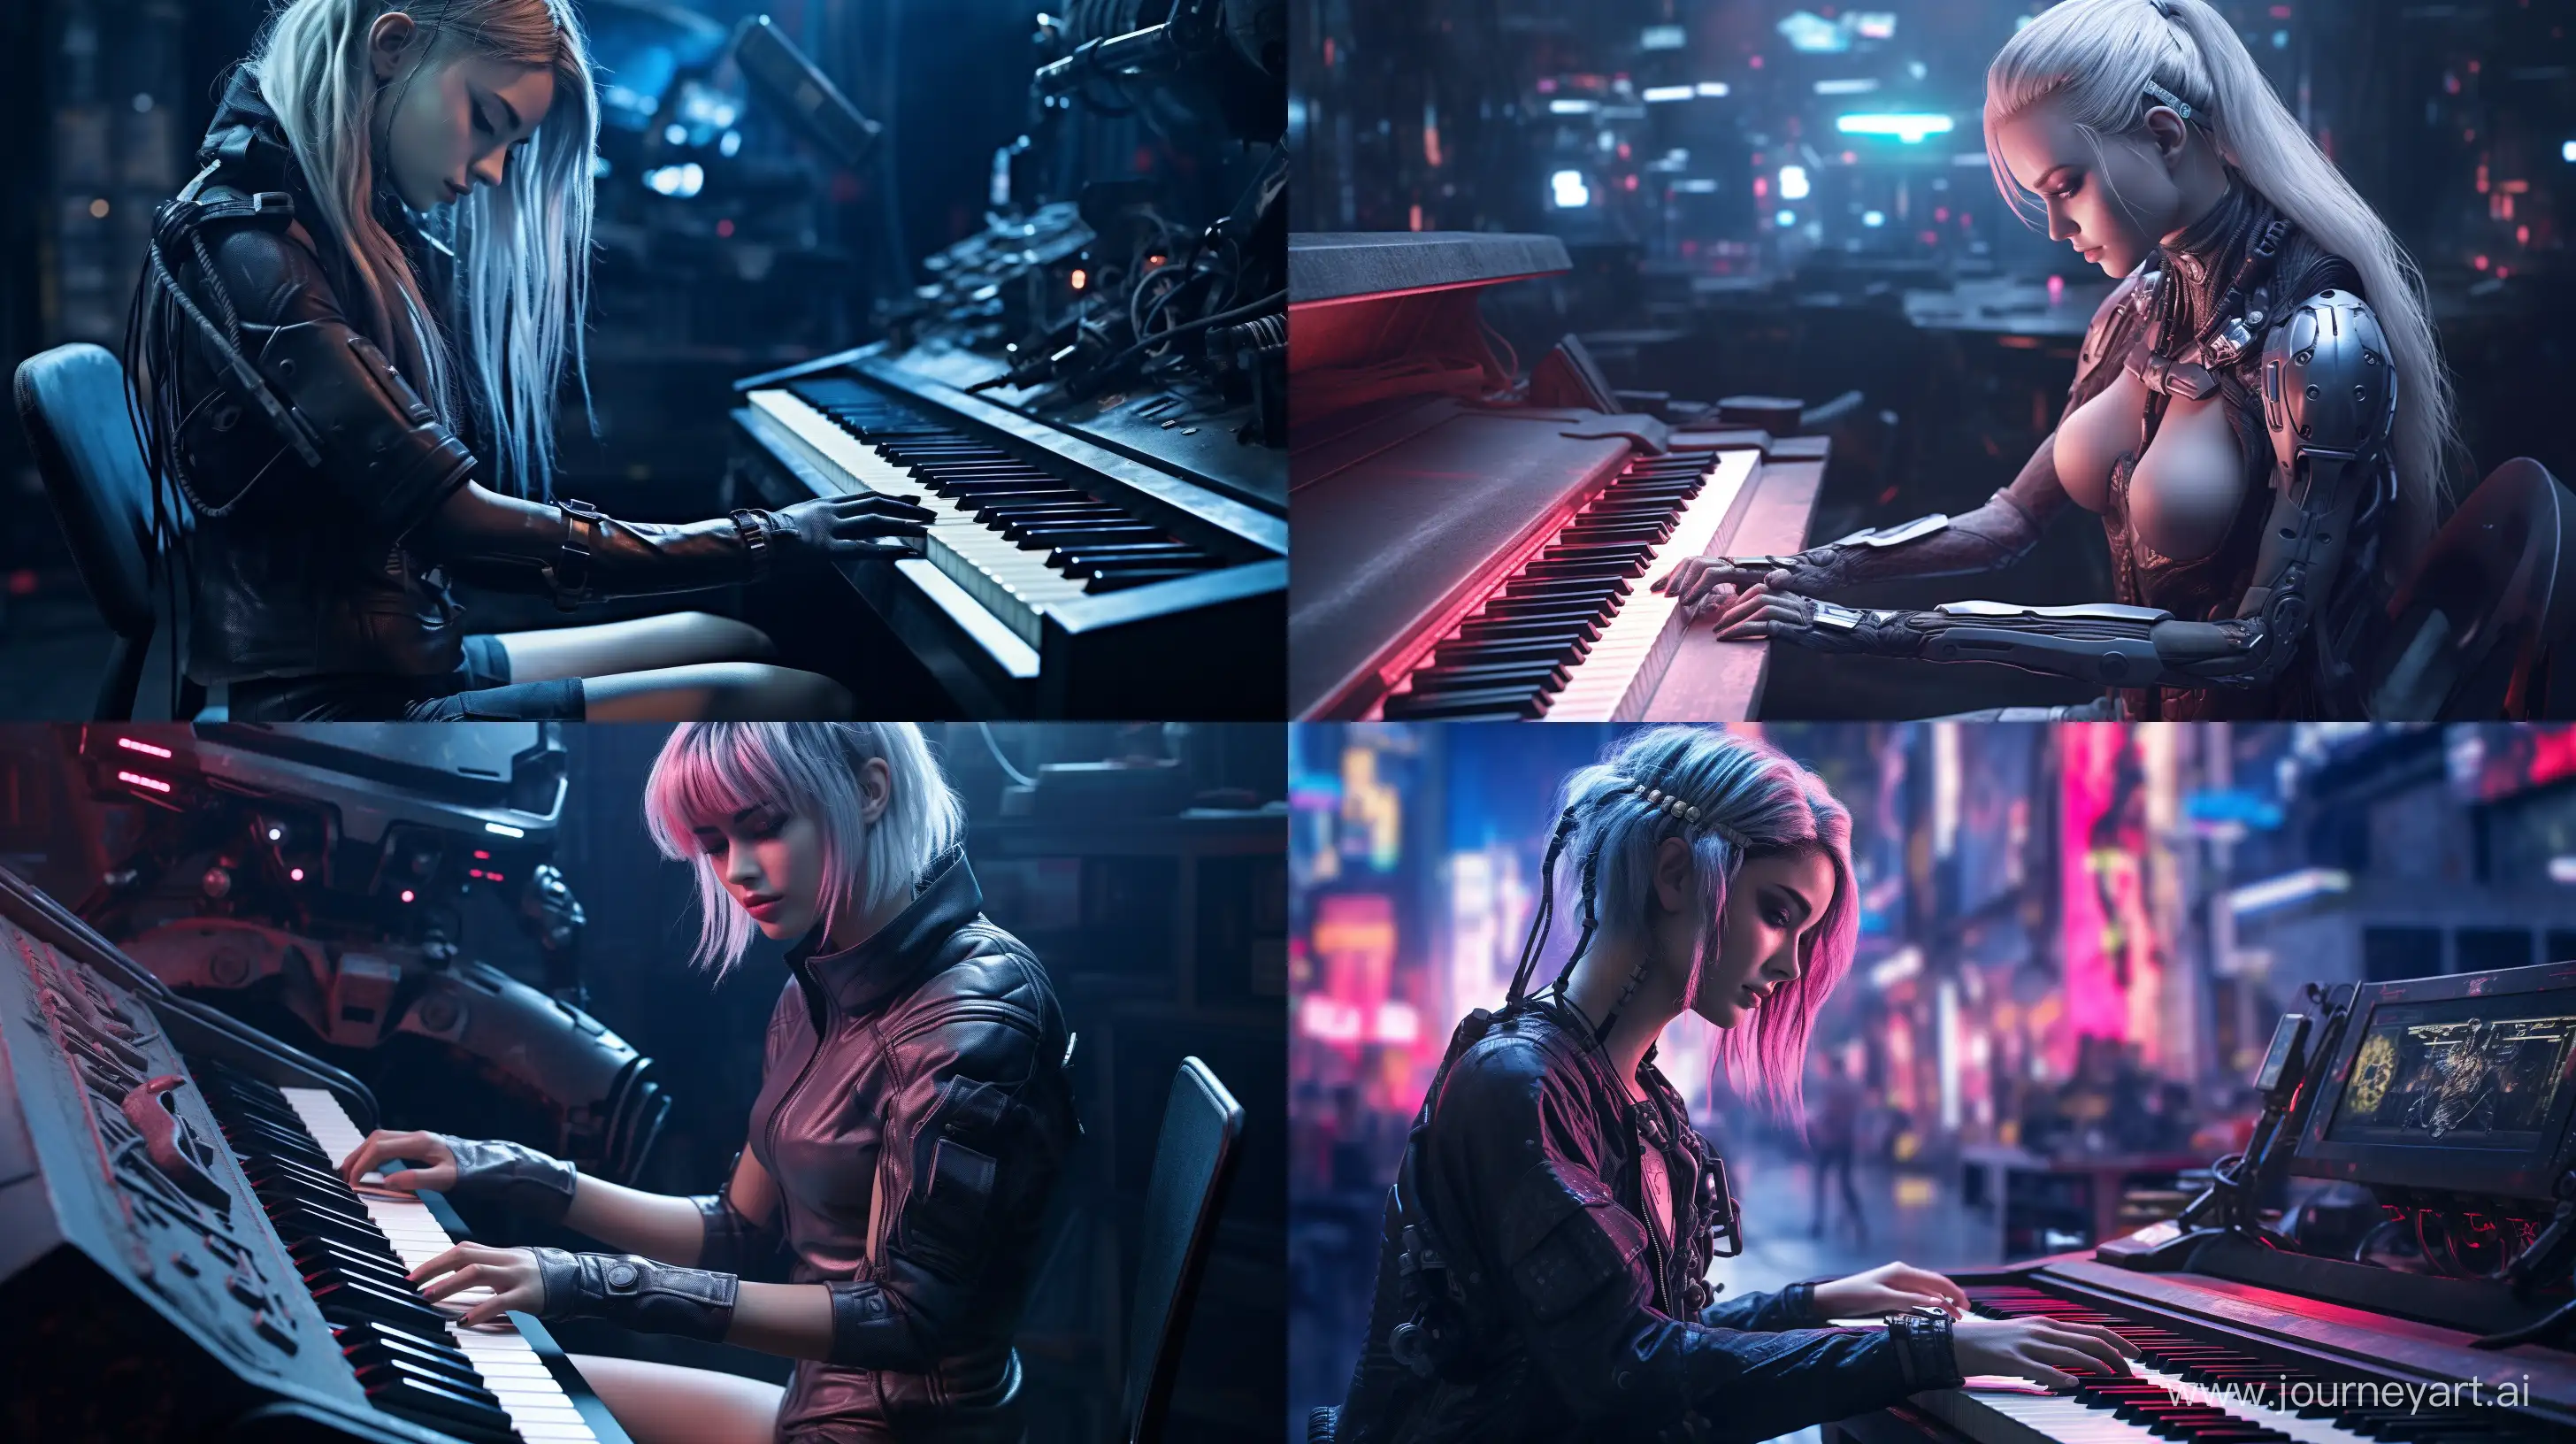 Futuristic-Cyberpunk-Girl-Playing-a-HighTech-Piano